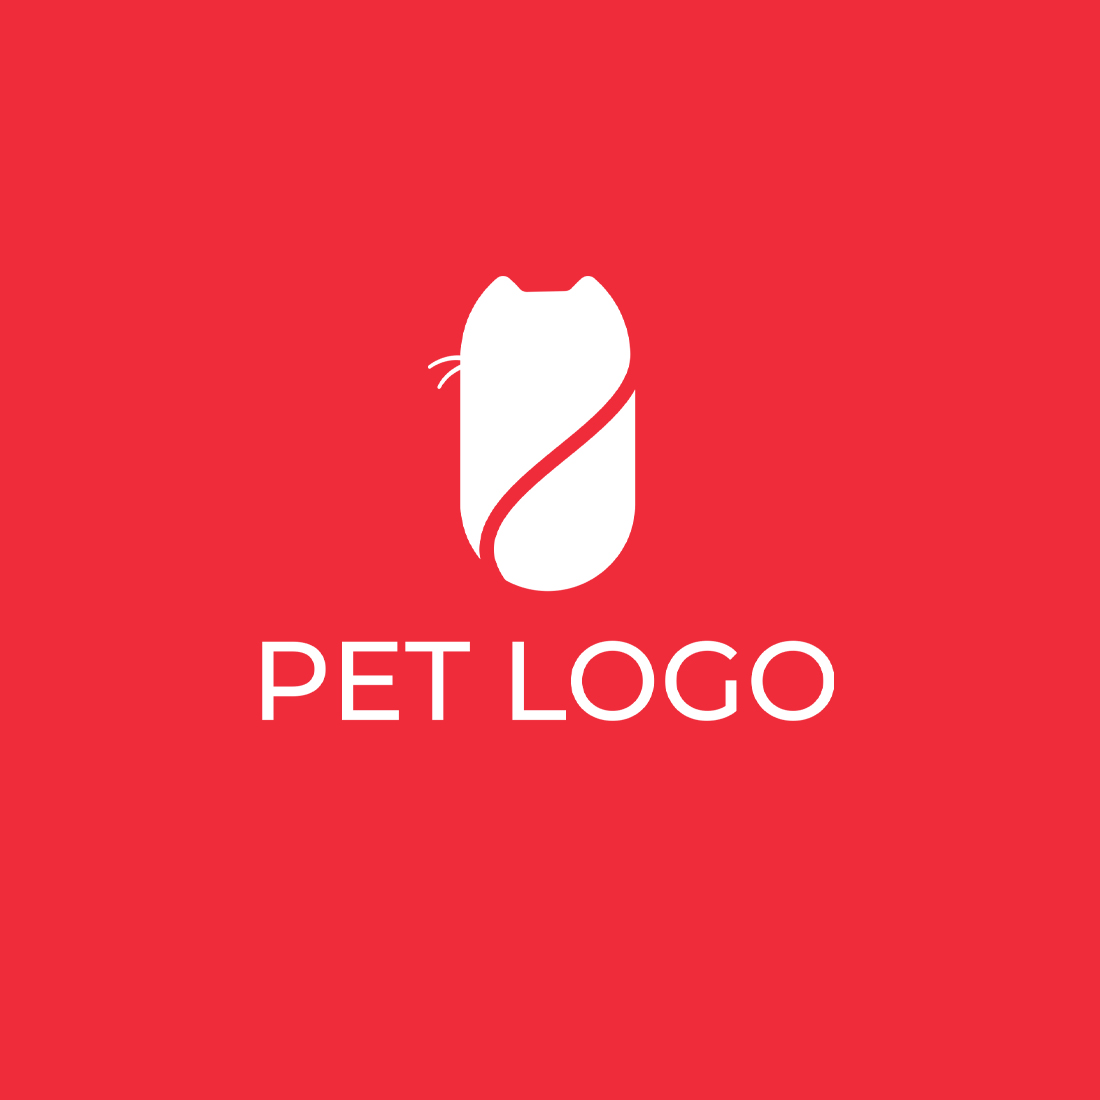 Pet logo preview image.